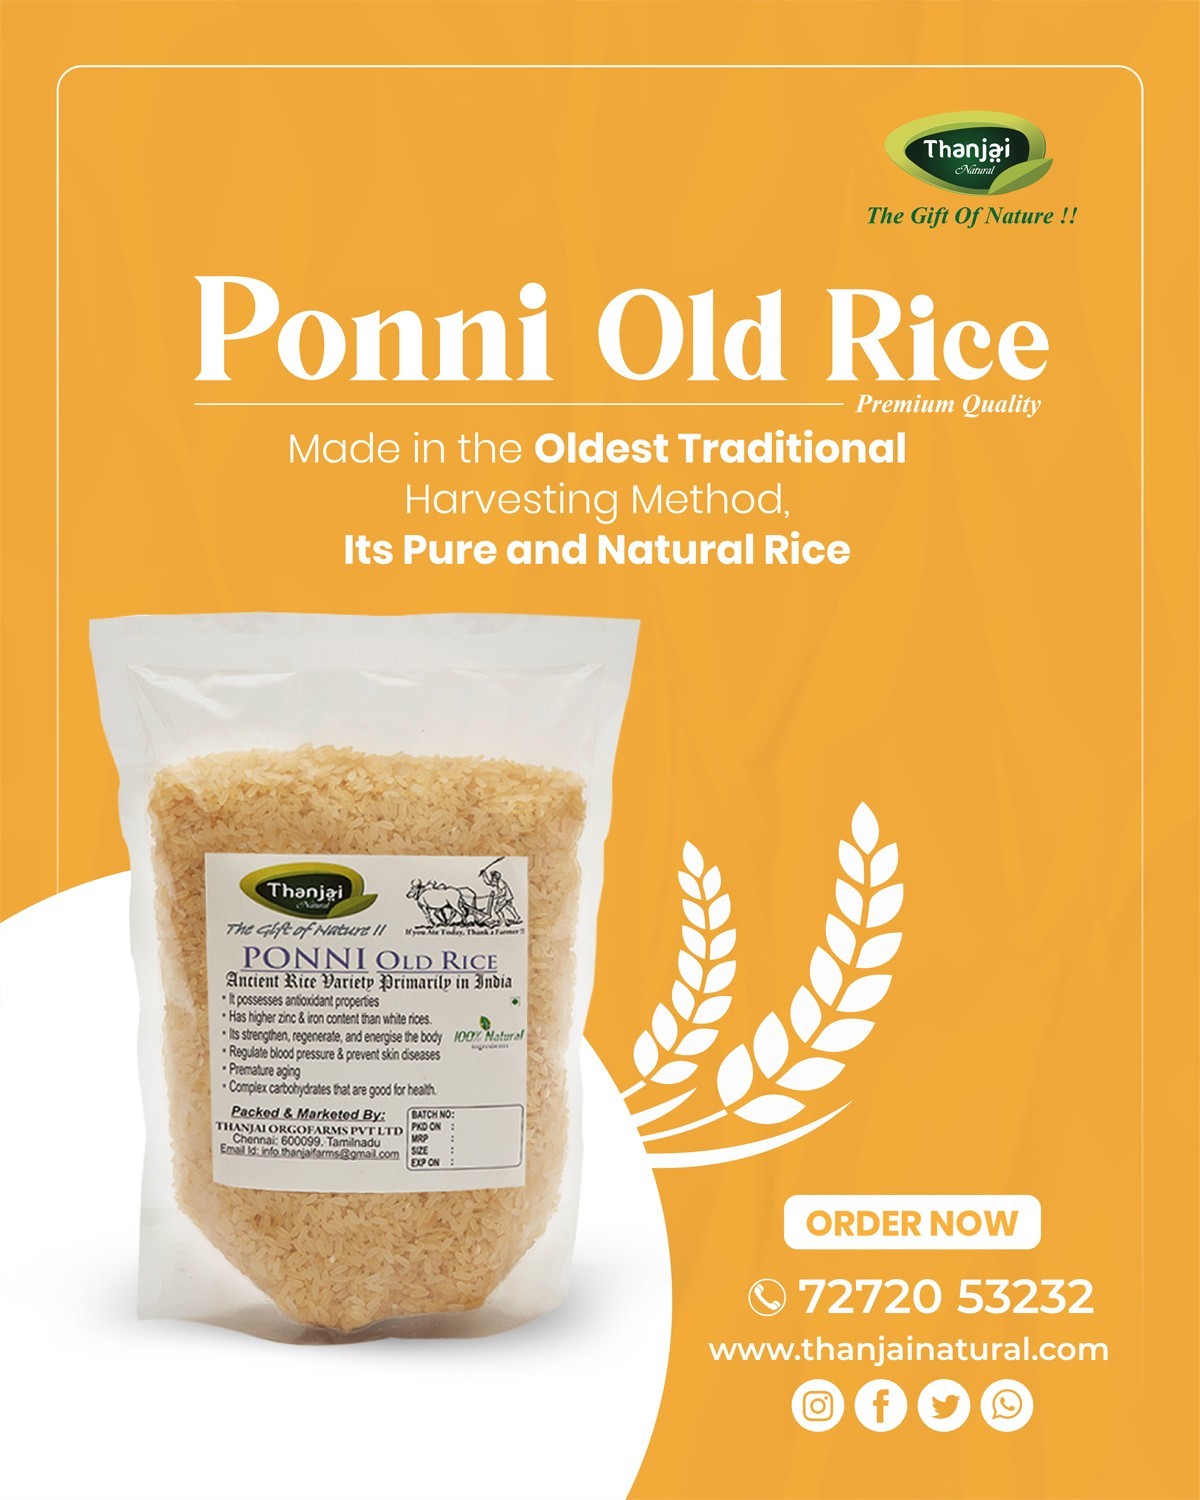 Ponni old rice